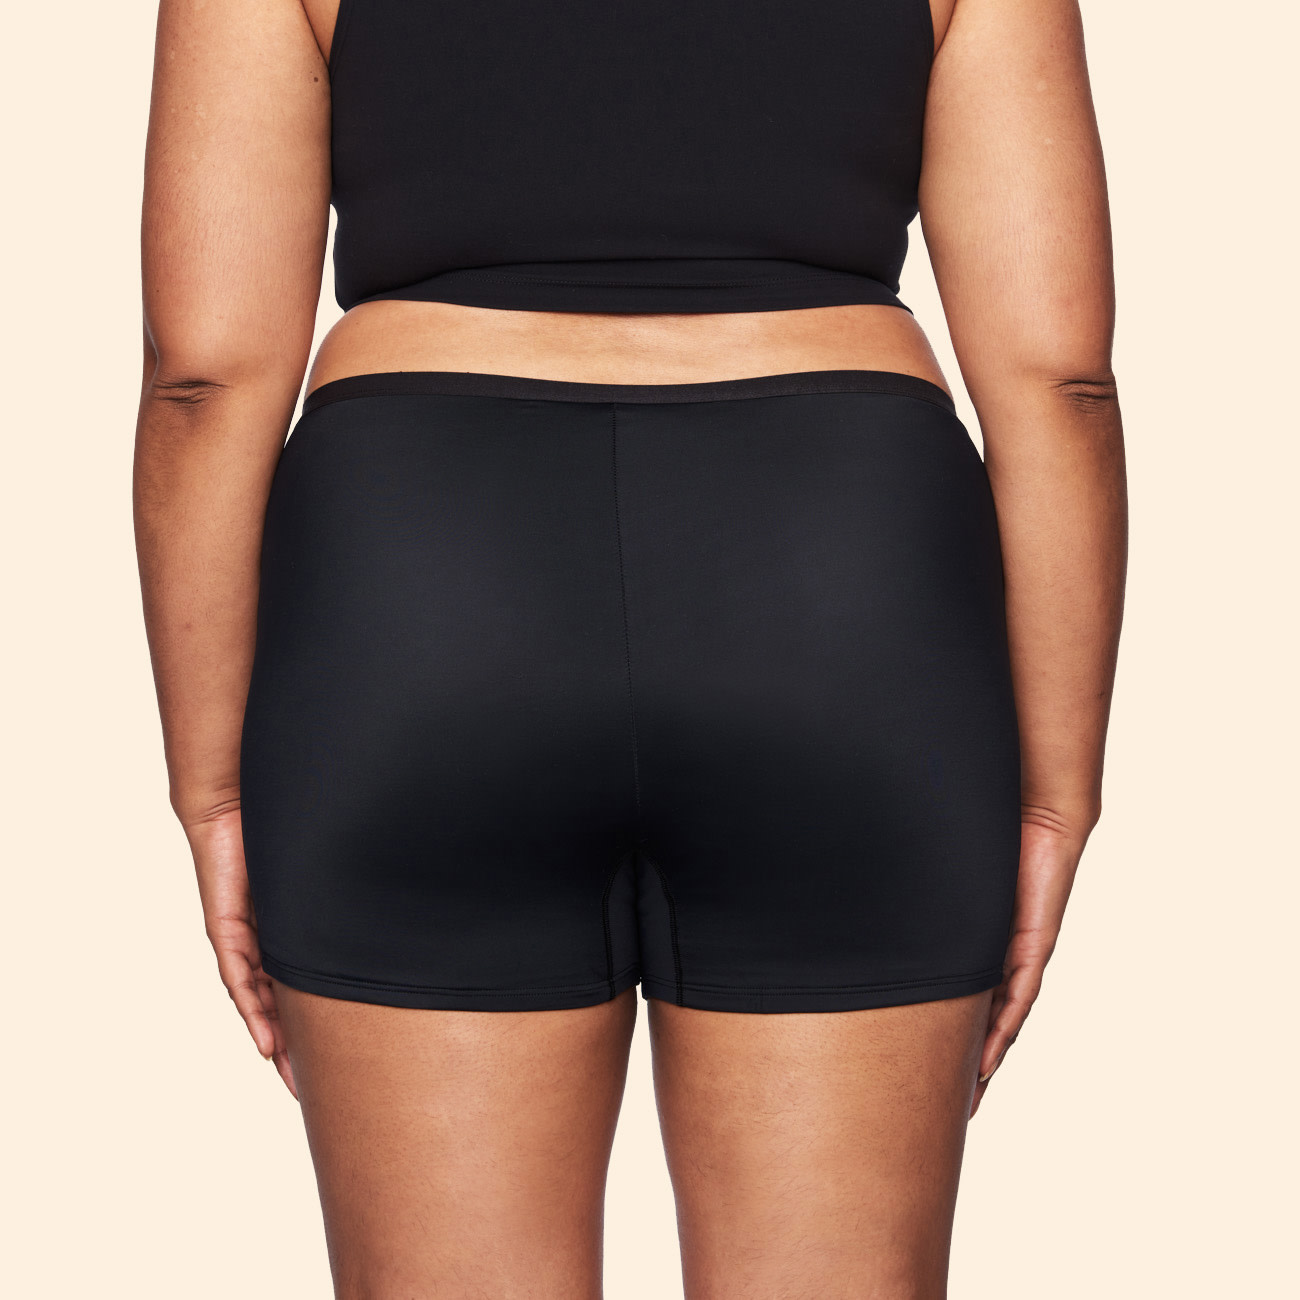 Thinx Teen Super Absorbency Single Shorts - Black : Target